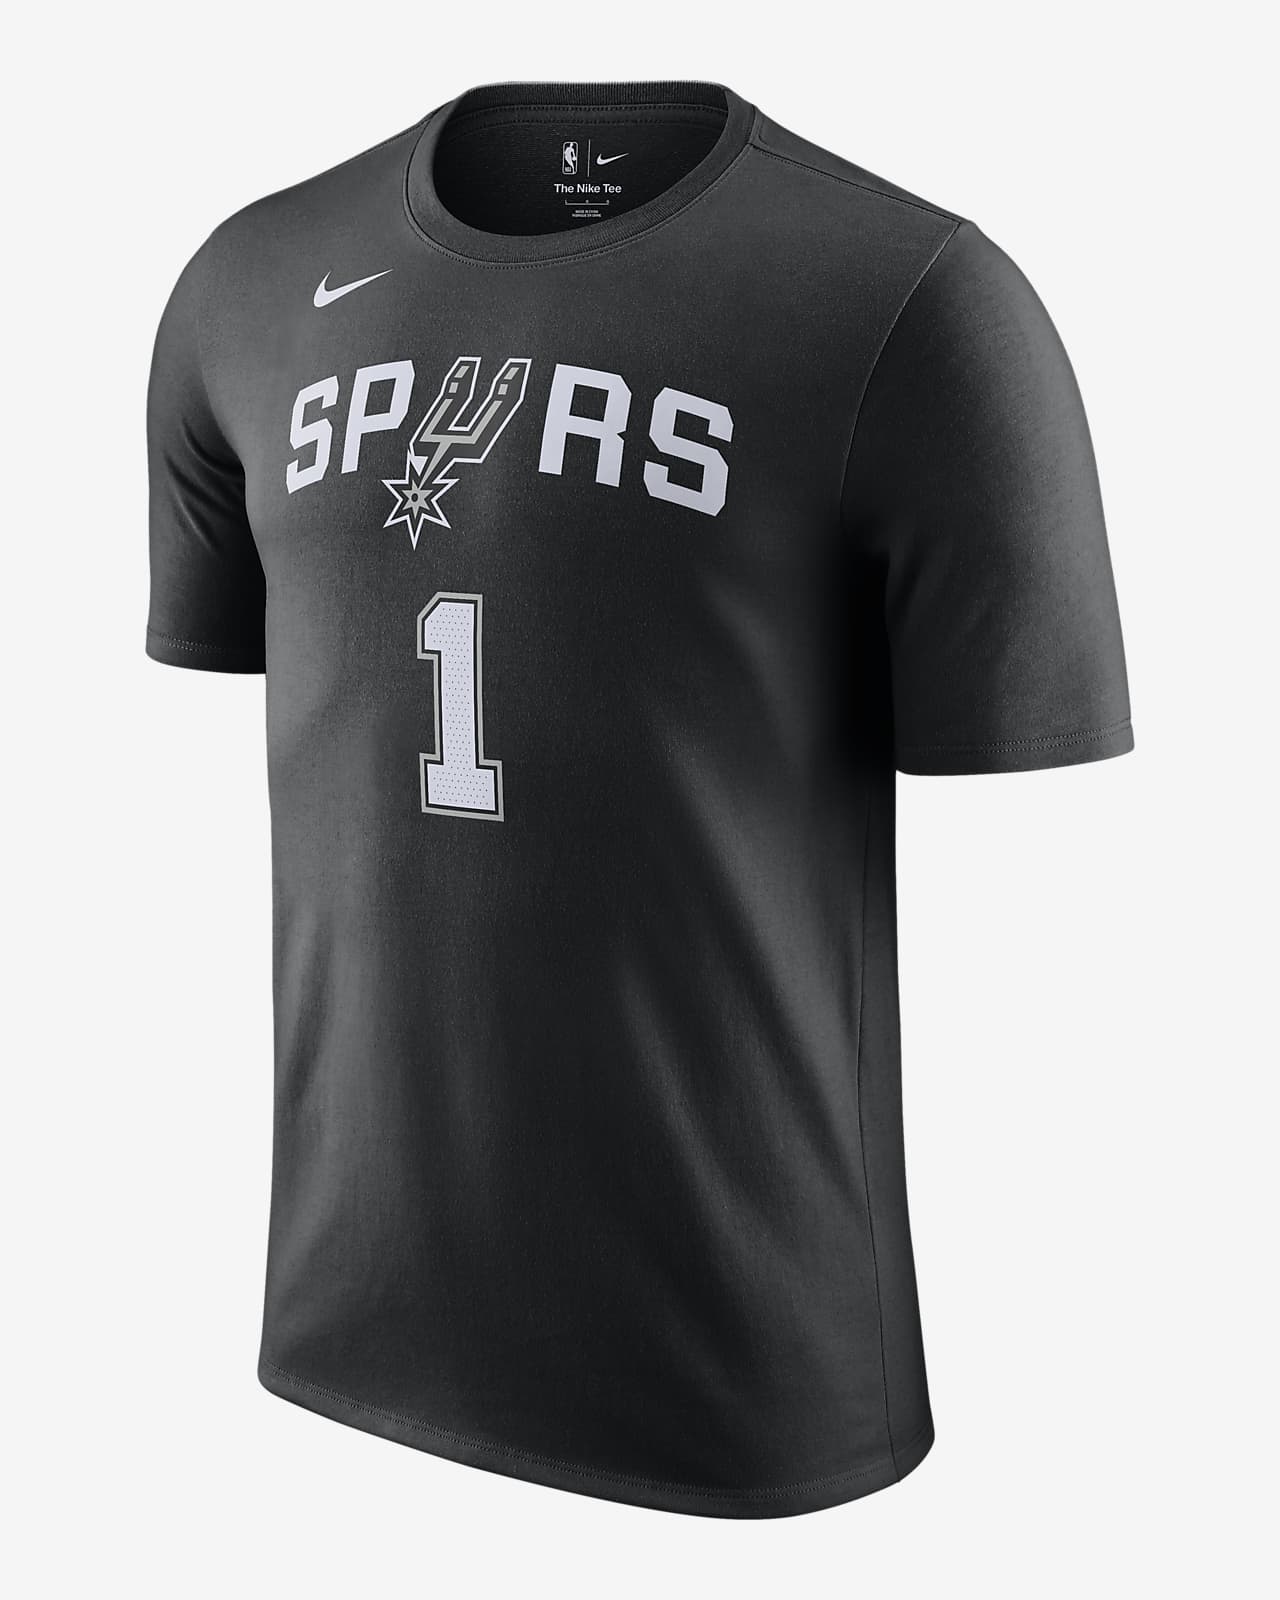 Playera Nike NBA para hombre San Antonio Spurs